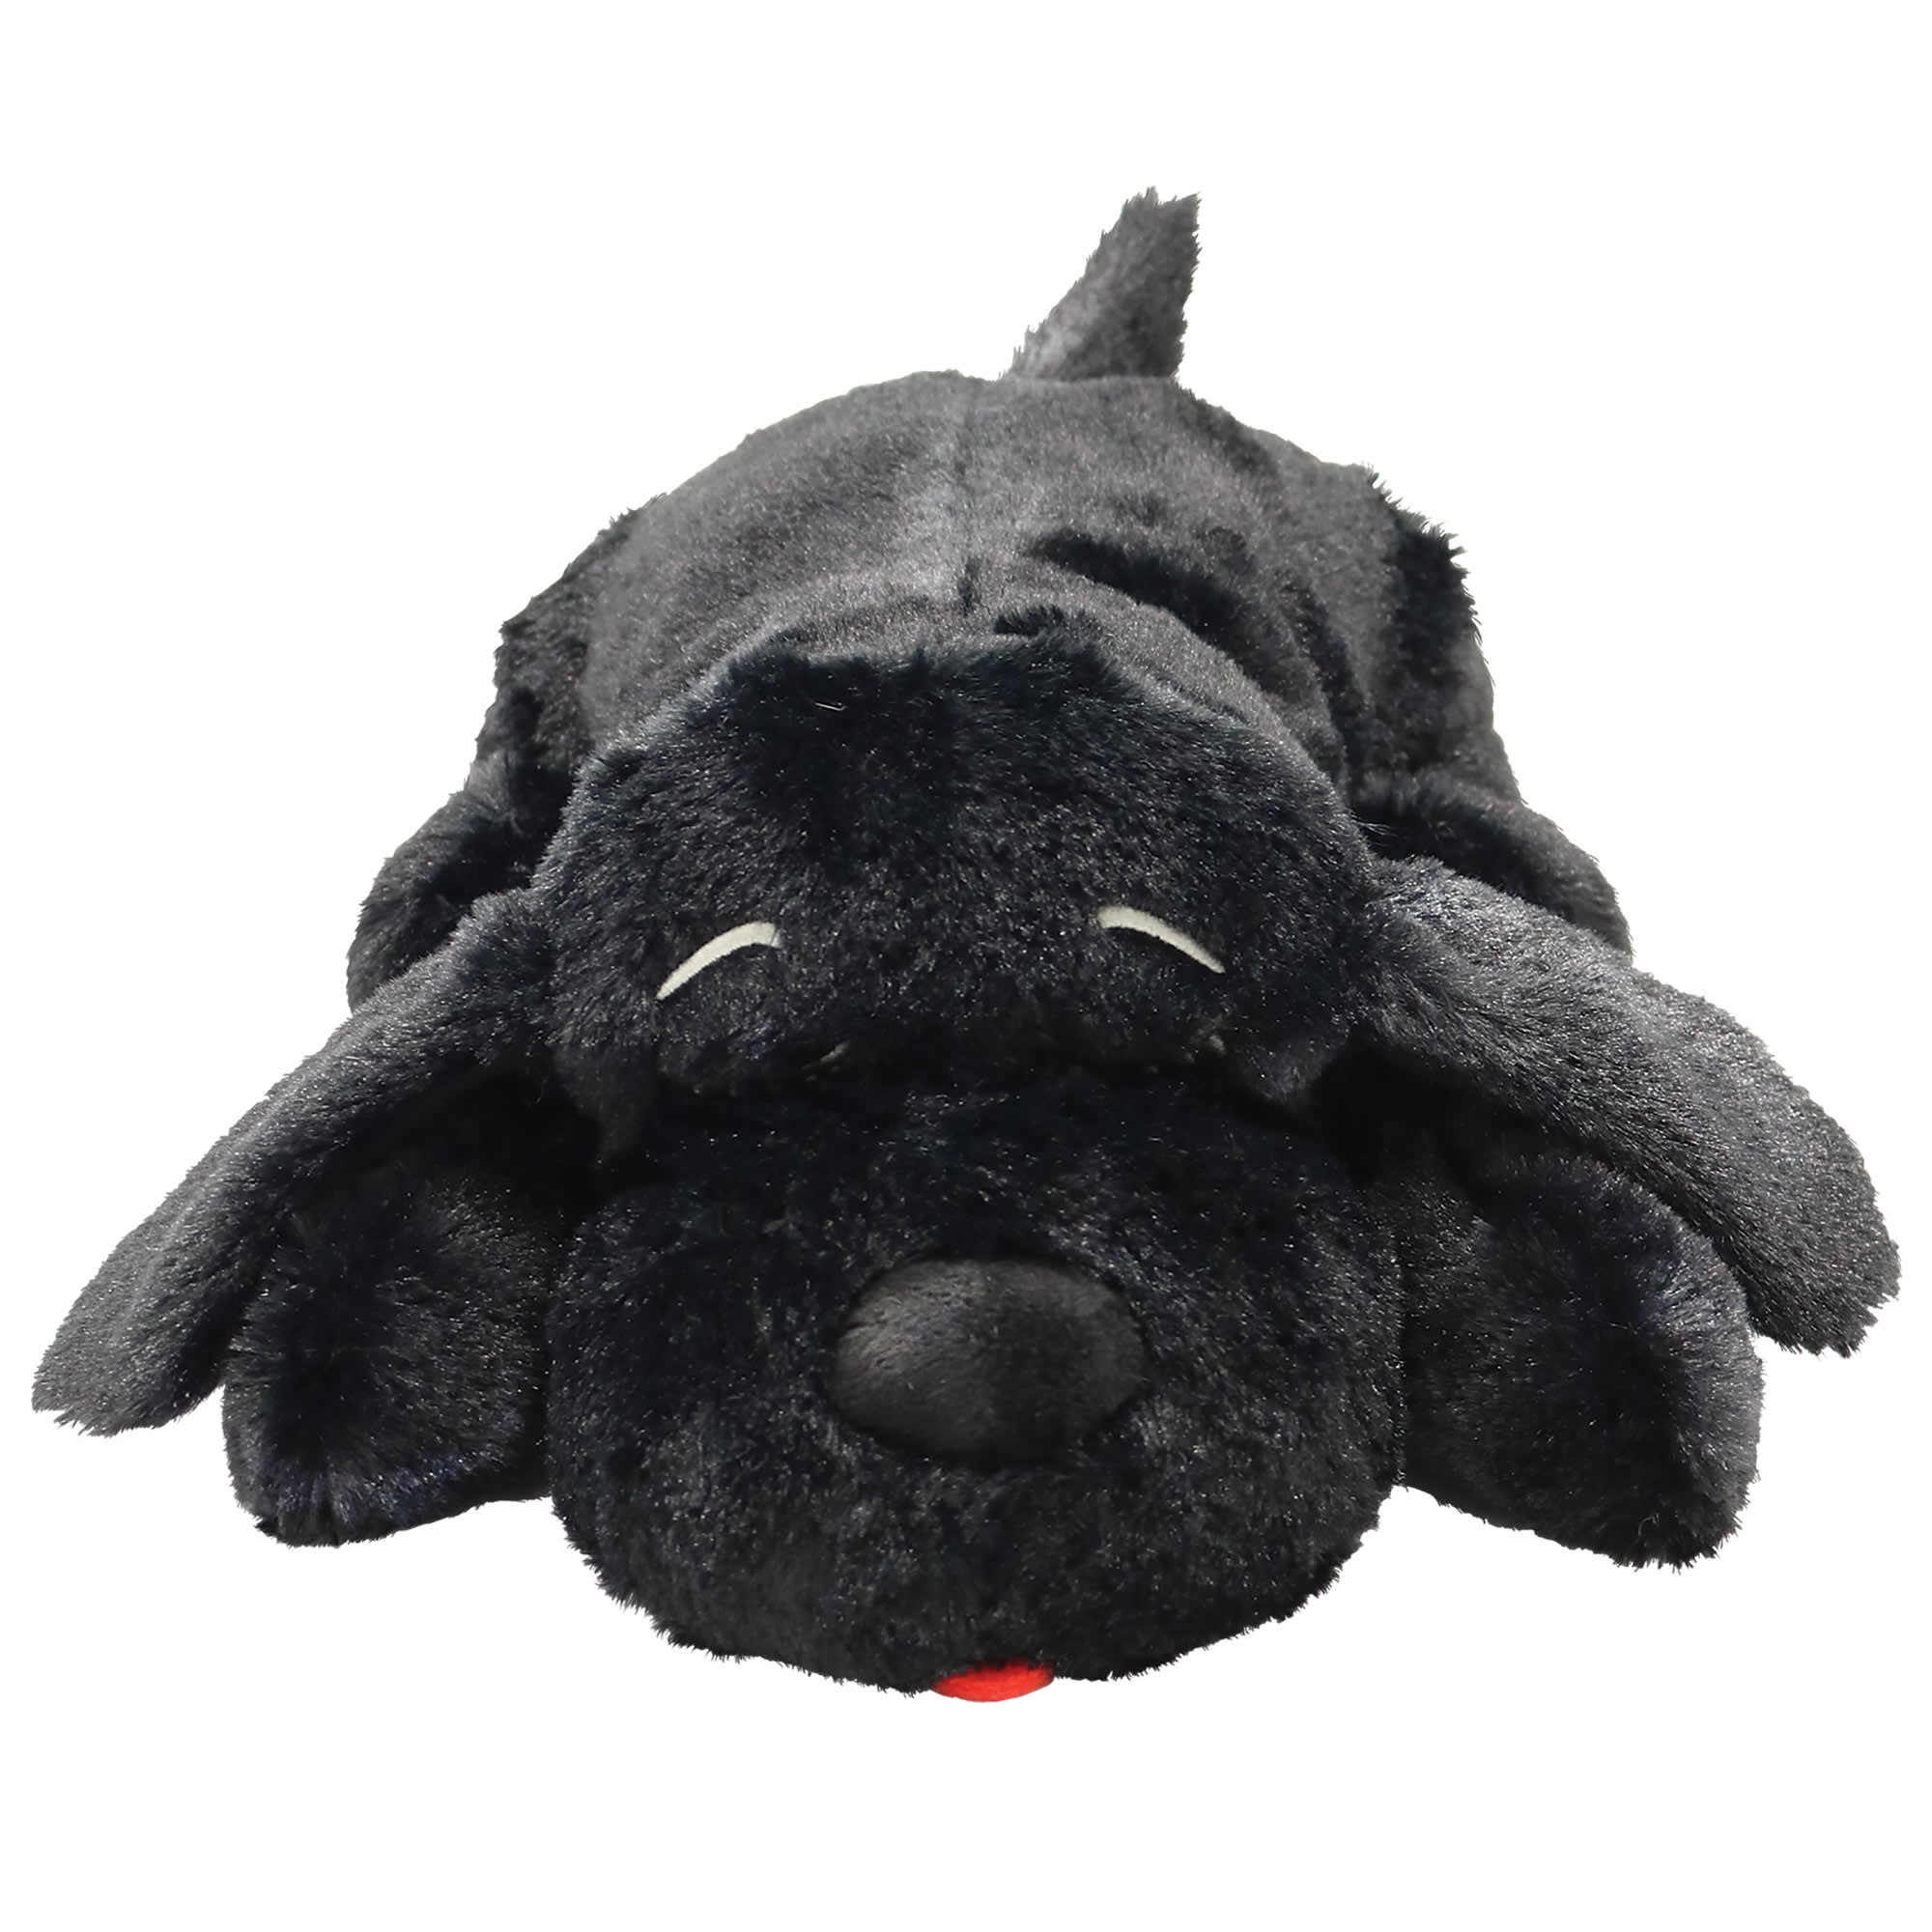 Snuggle Puppy Black Behavioral Aid Dog Toy, Large